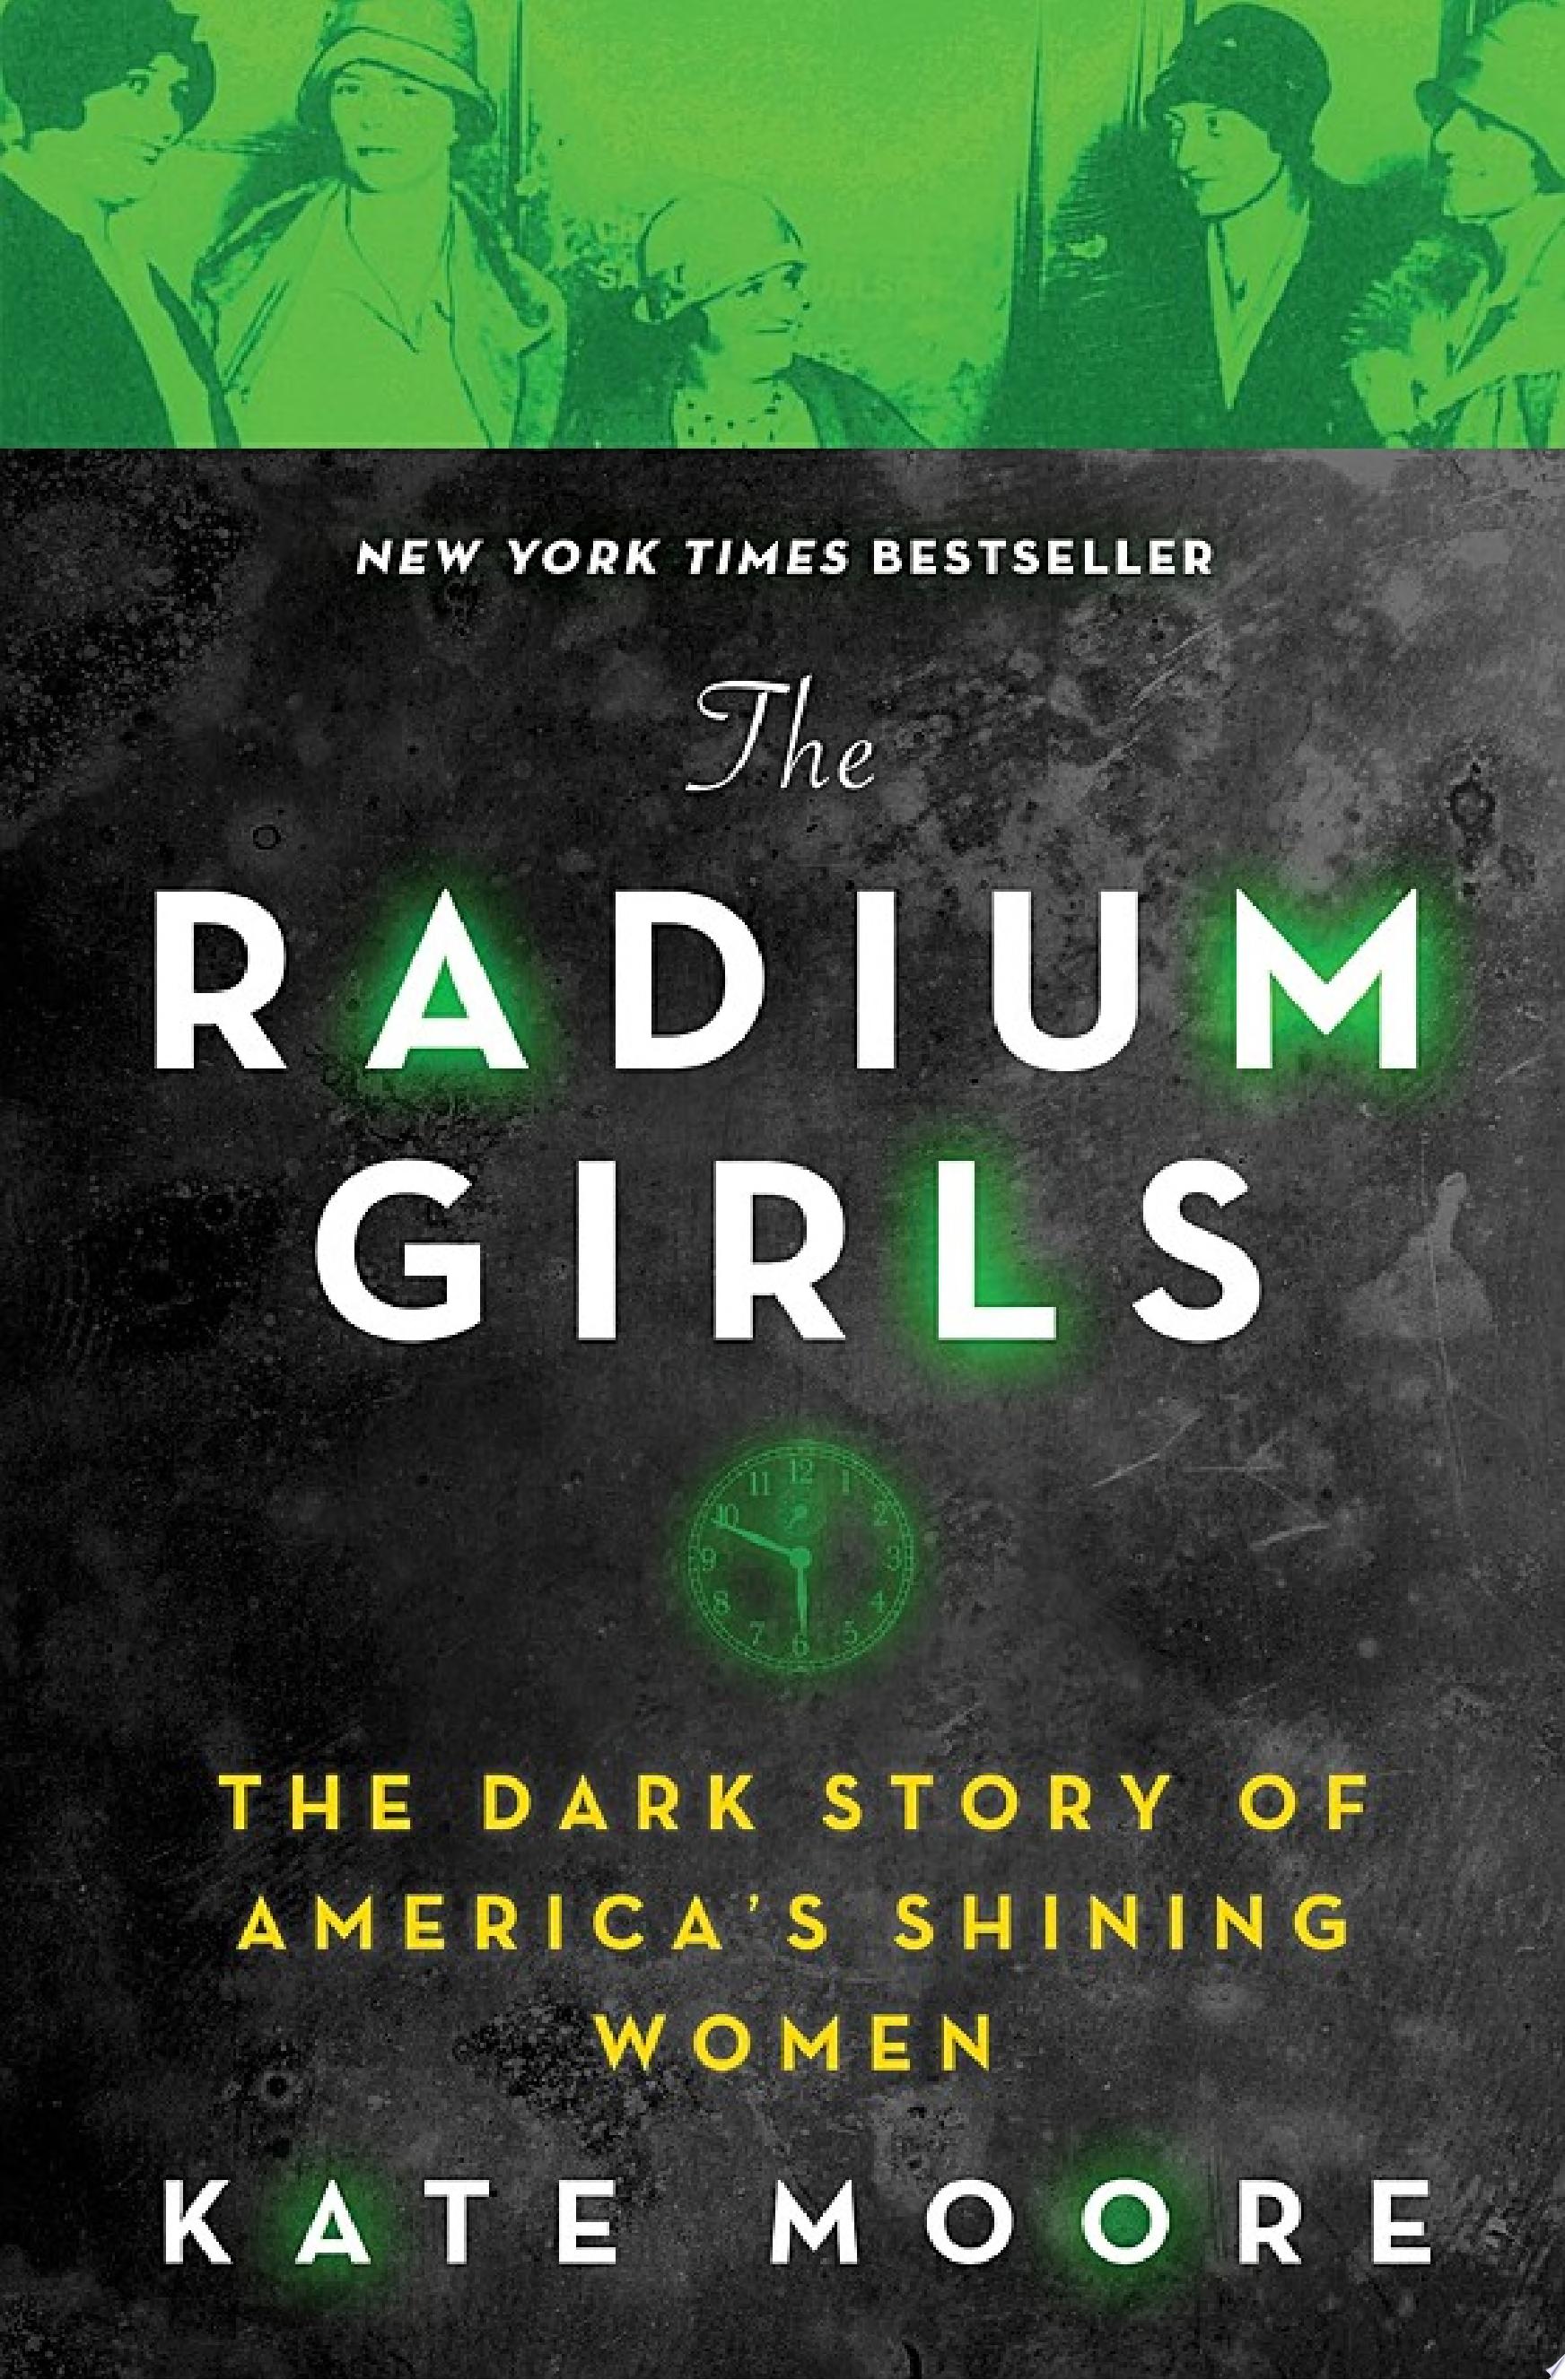 Image for "The Radium Girls"